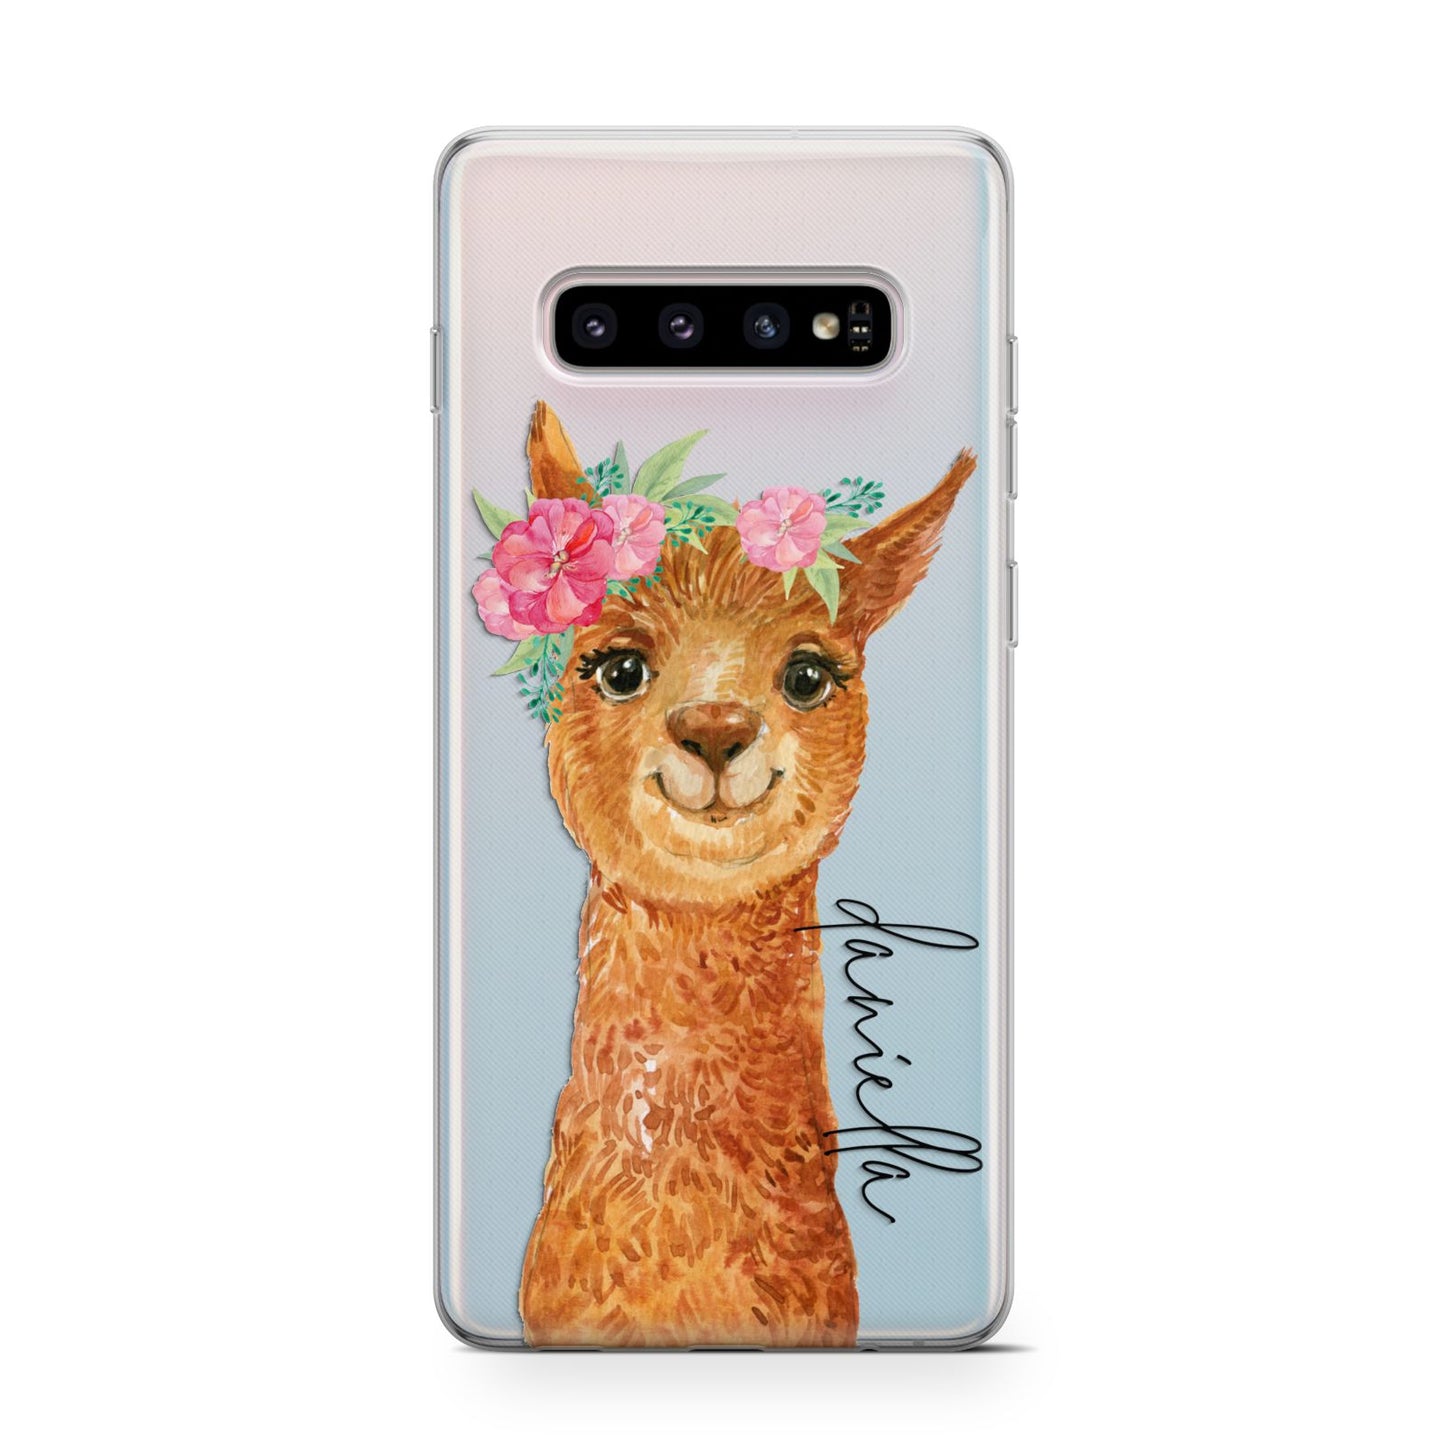 Personalised Llama Samsung Galaxy S10 Case